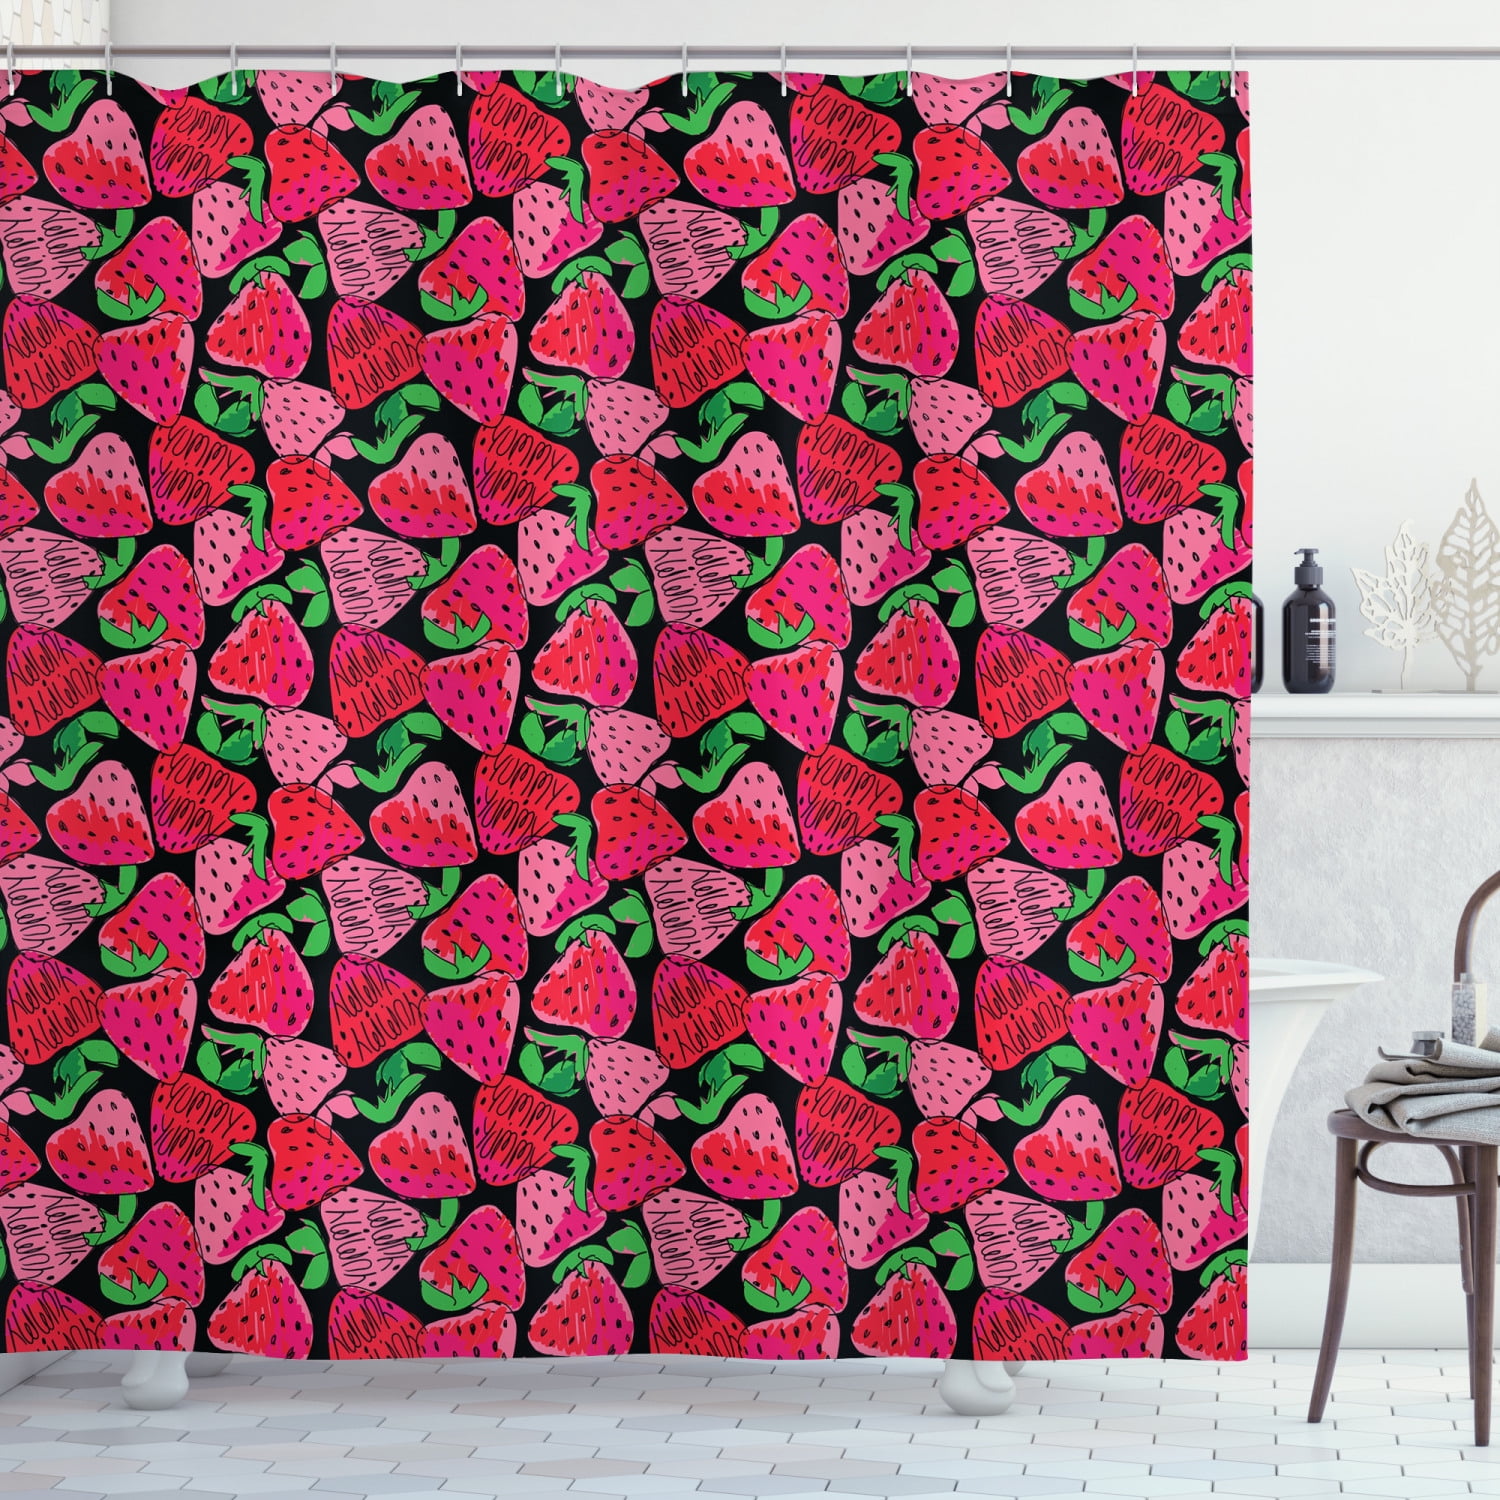 Food Strawberry and Milk Bath Shower Curtain Bathroom Waterproof Fabric & Hooks 